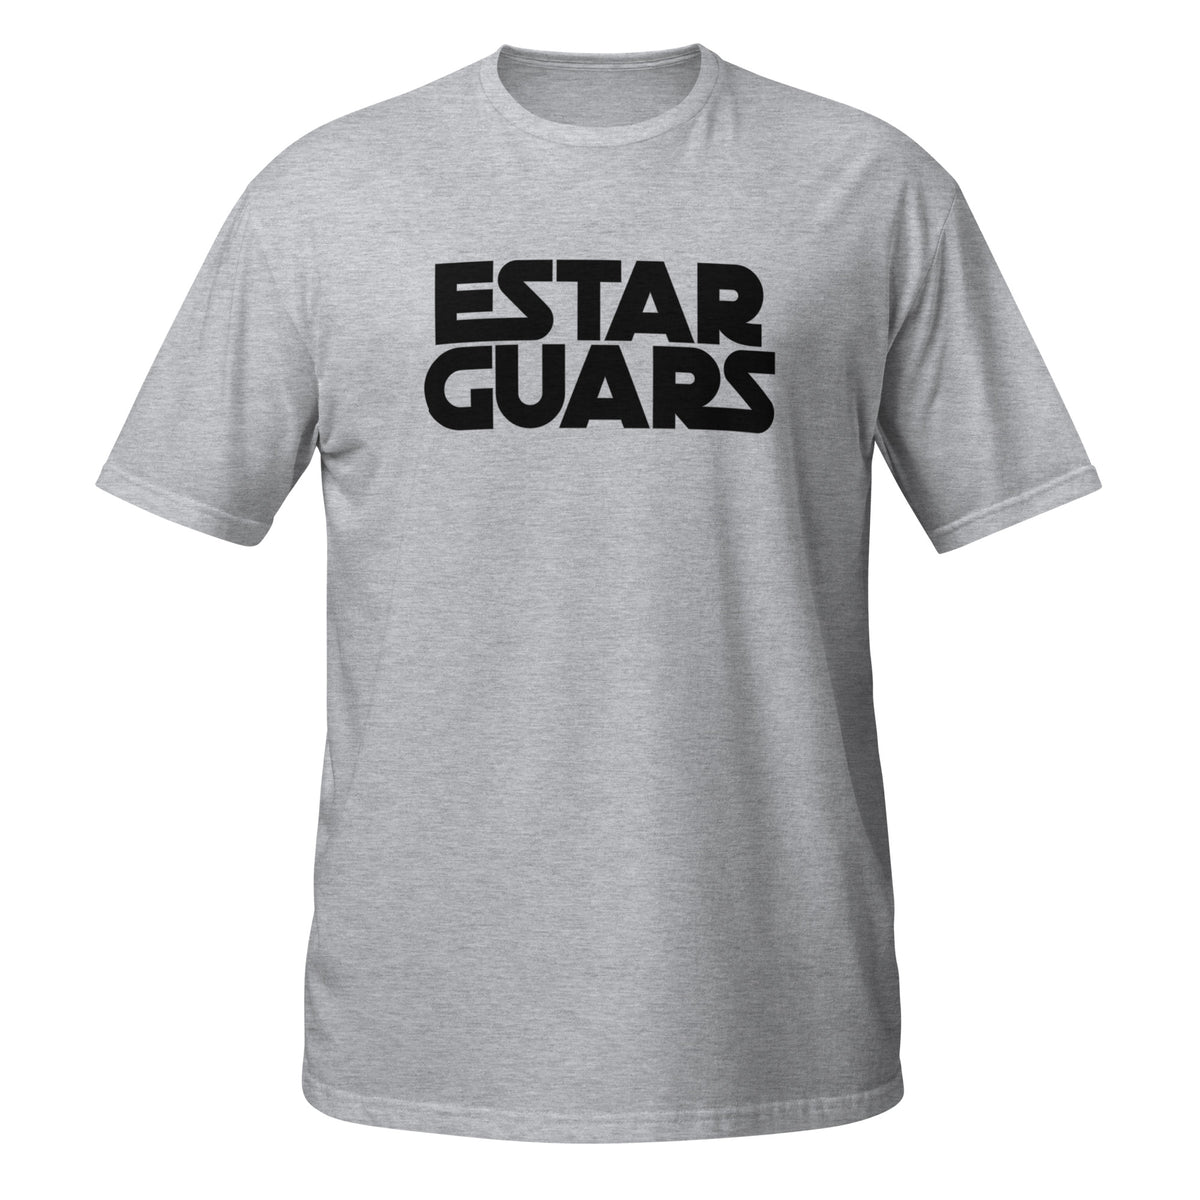 Estar Guars (Star Wars) T-Shirt